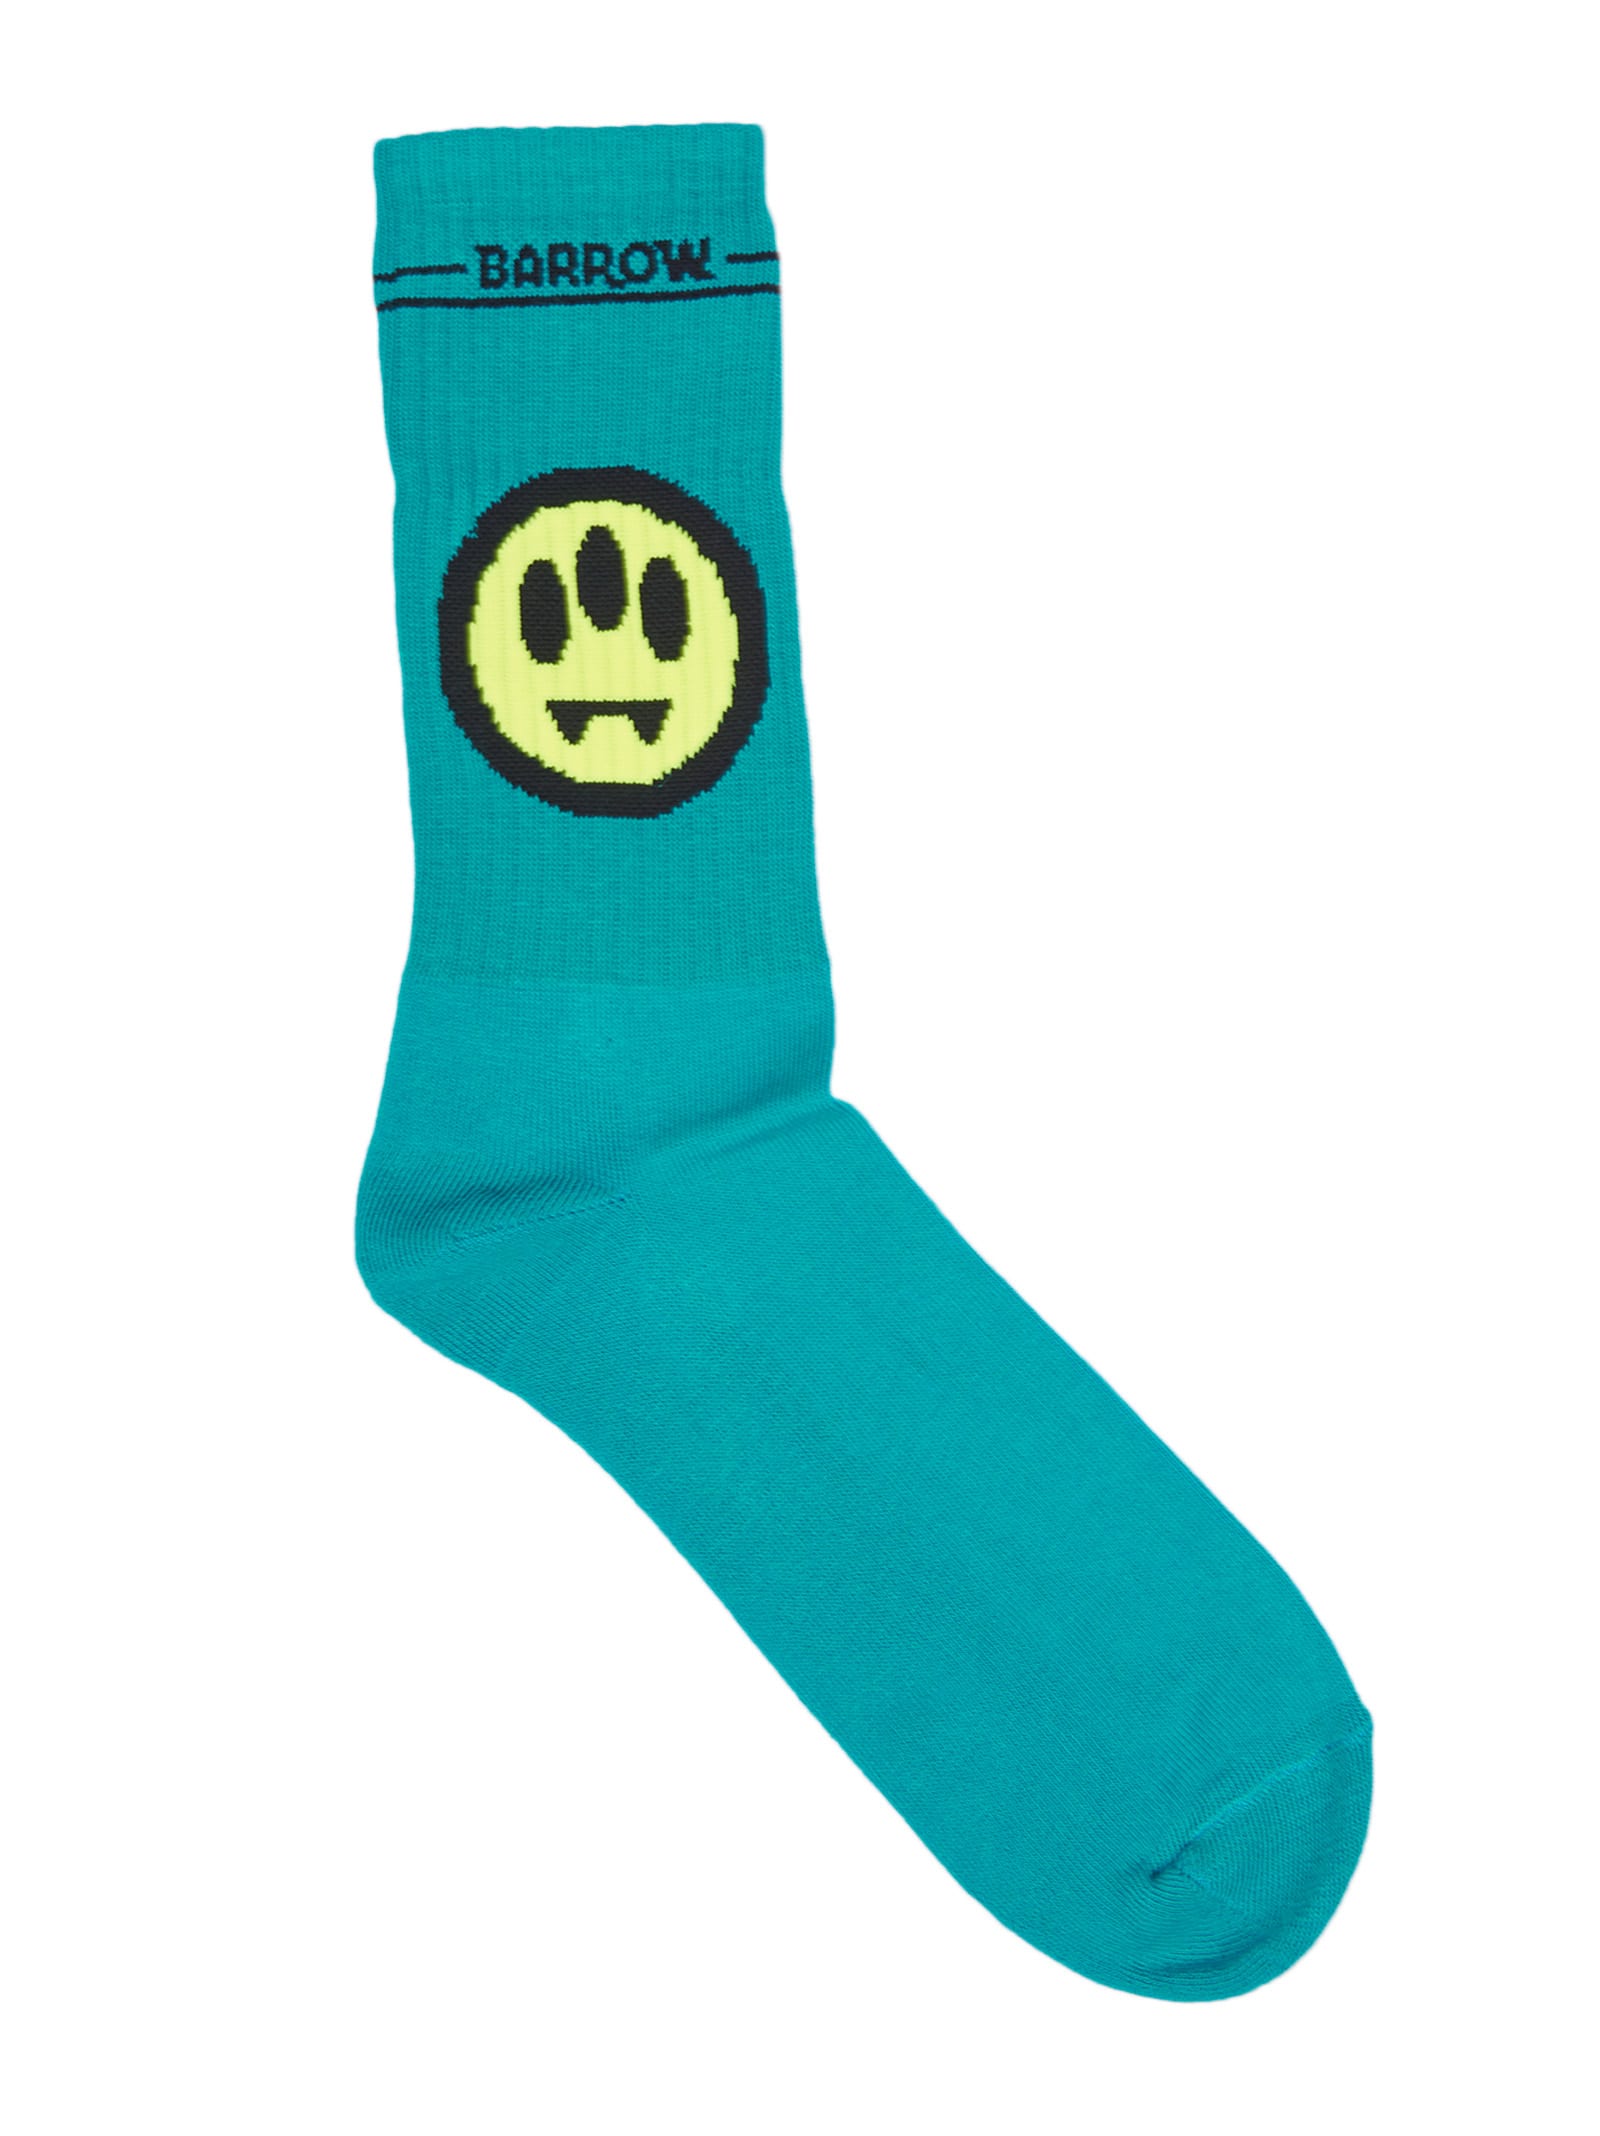 Barrow Turquoise Socks With Logo